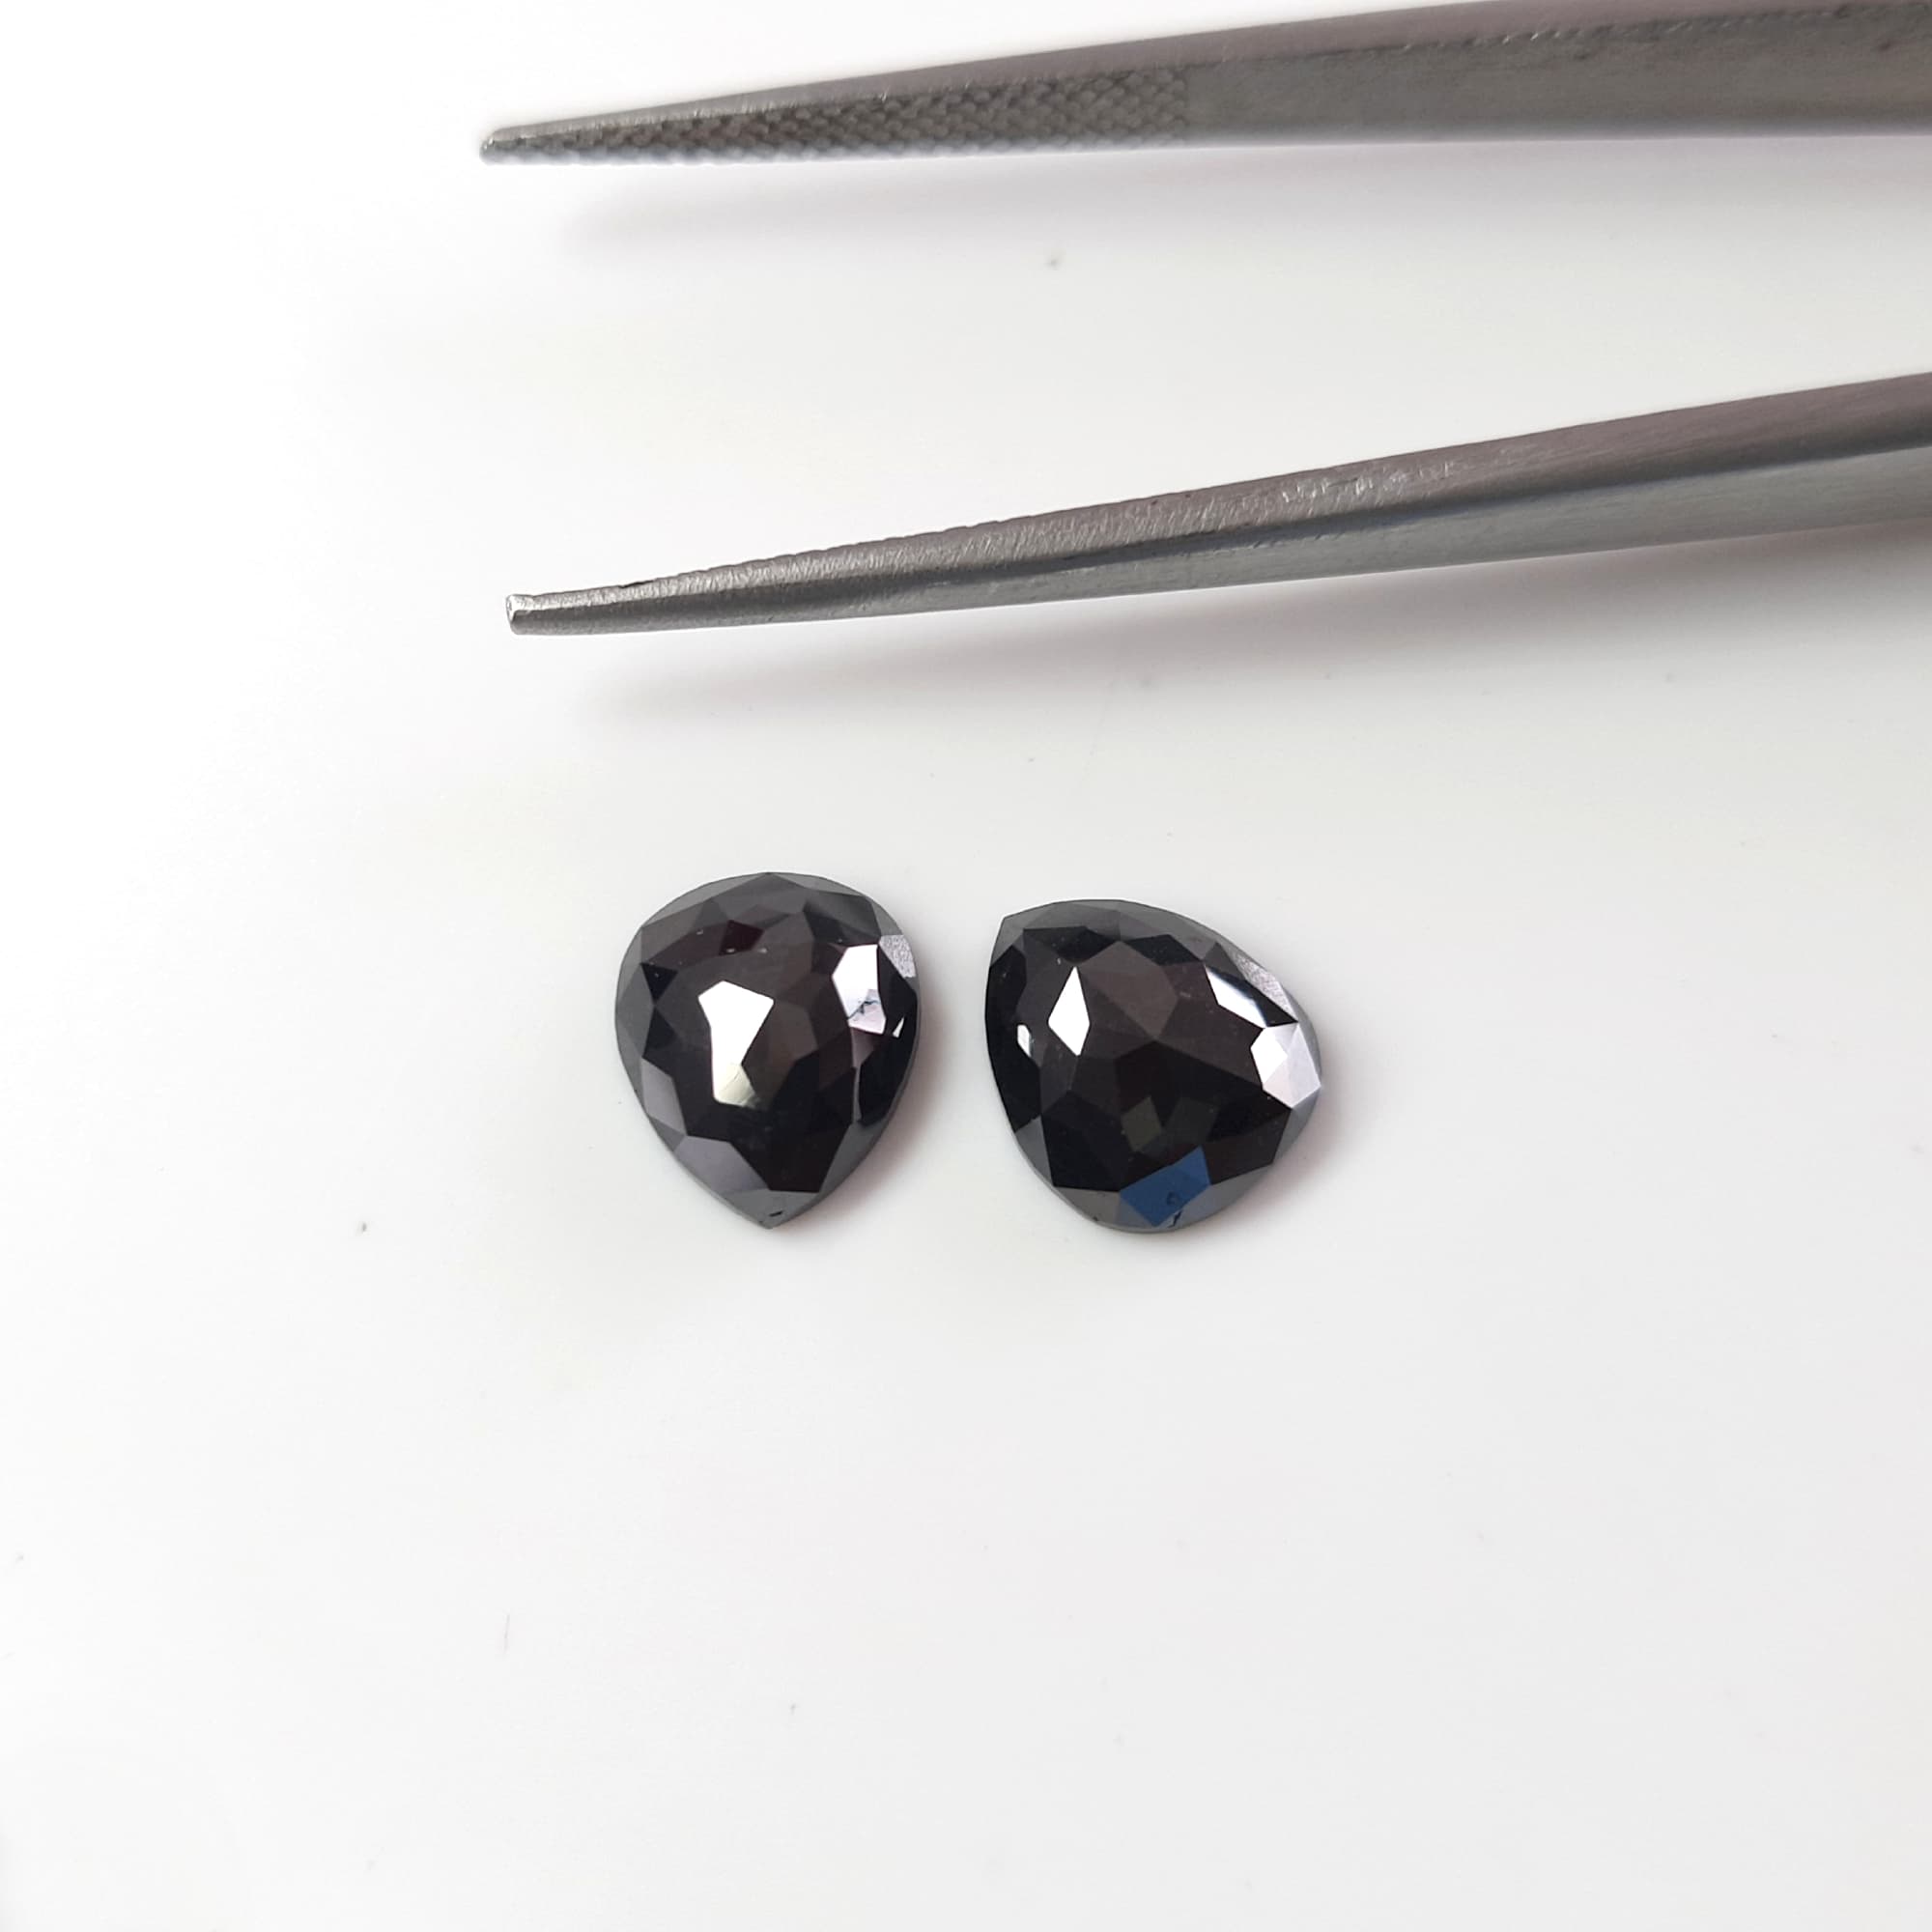 3.69 Ct Loose Black Diamond Pear Shaped